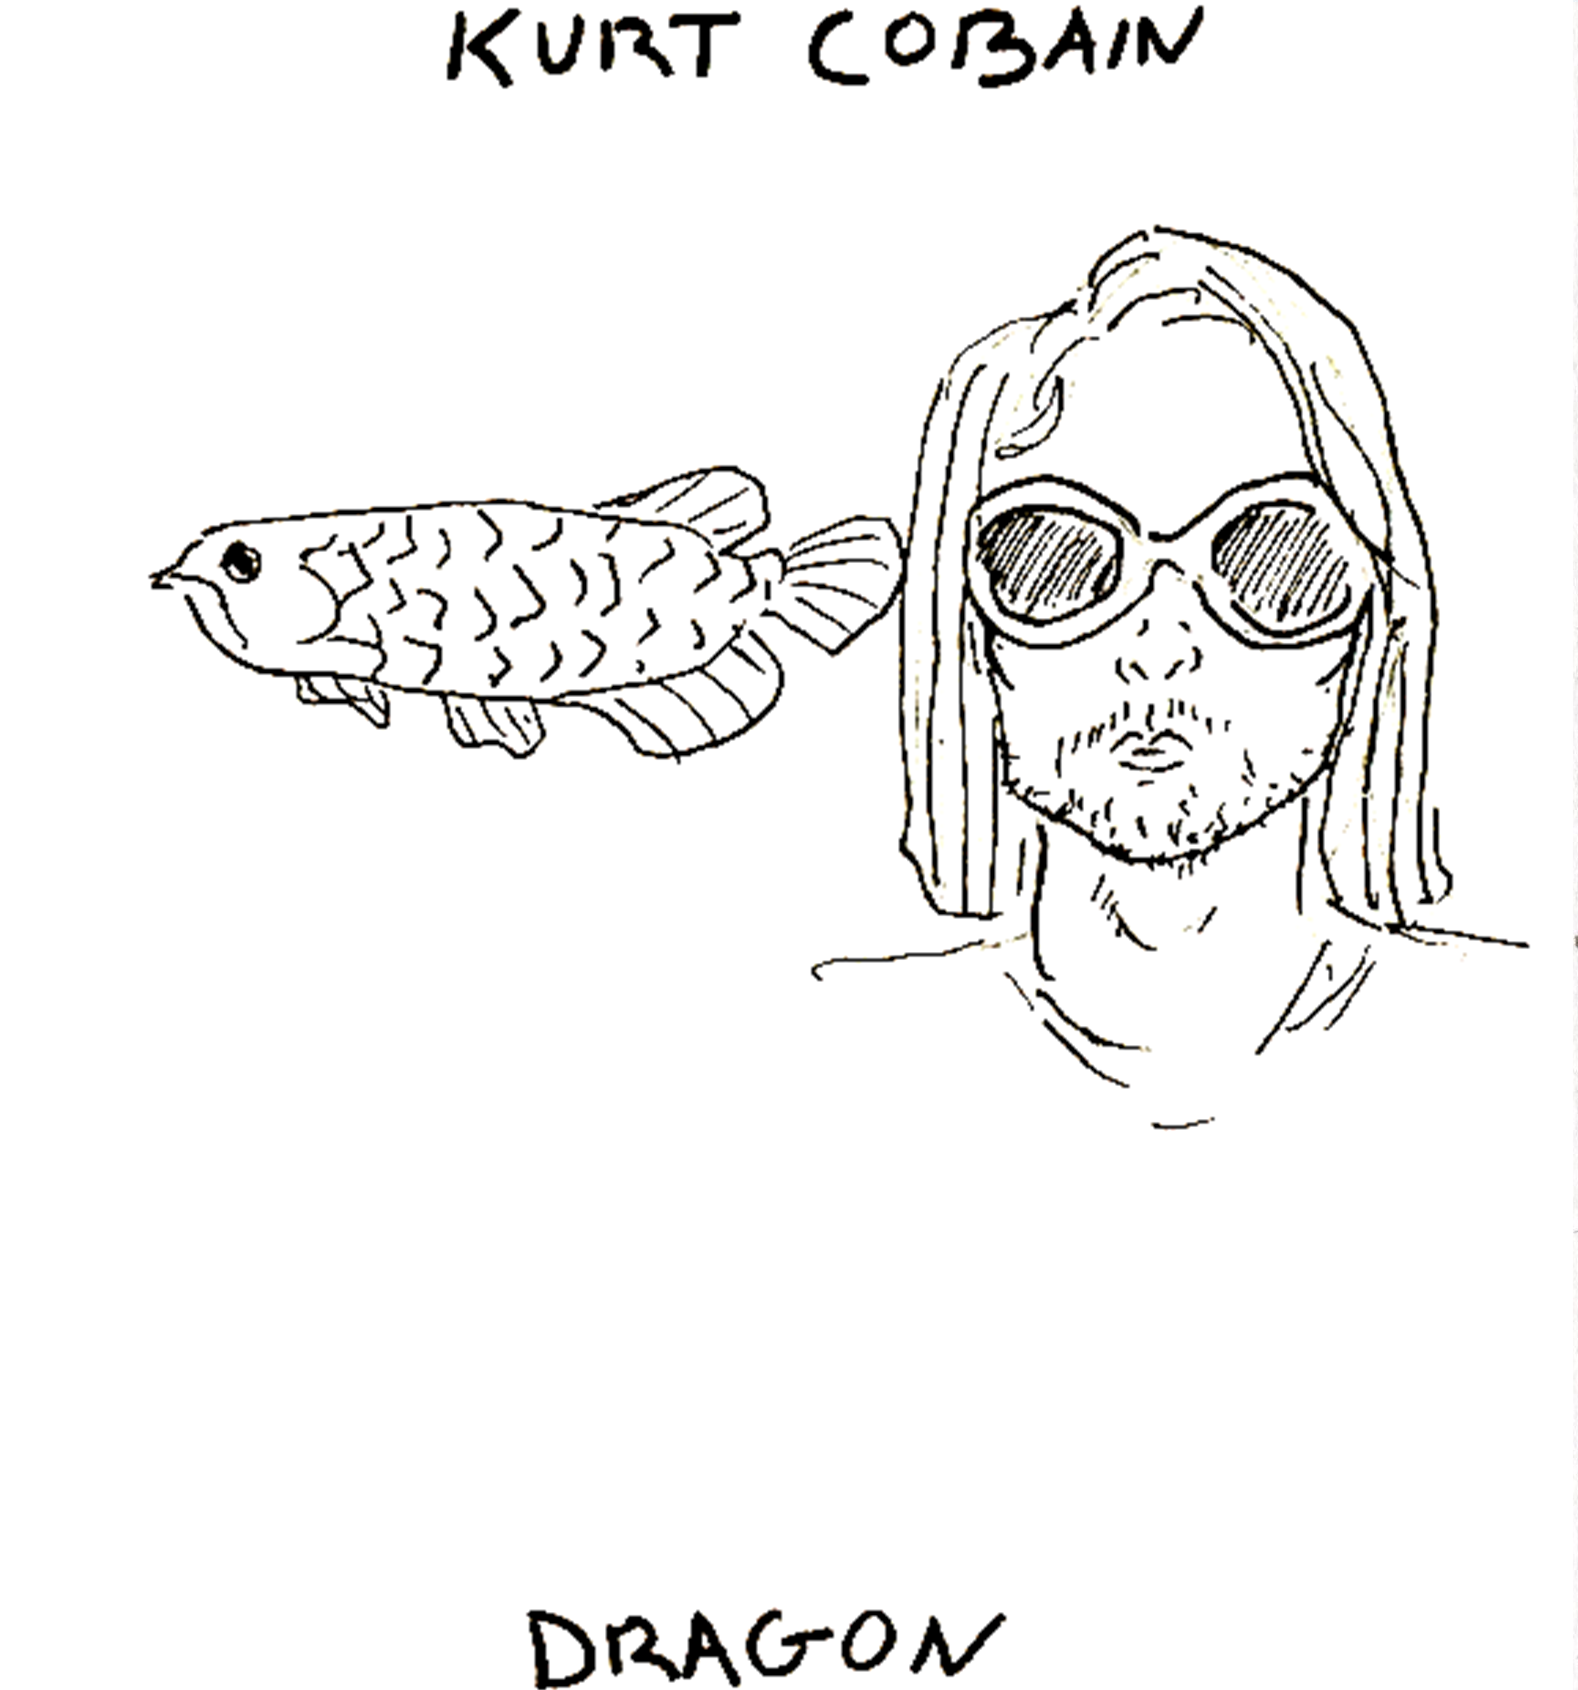 red fish as frontmen comic - Kurt.png